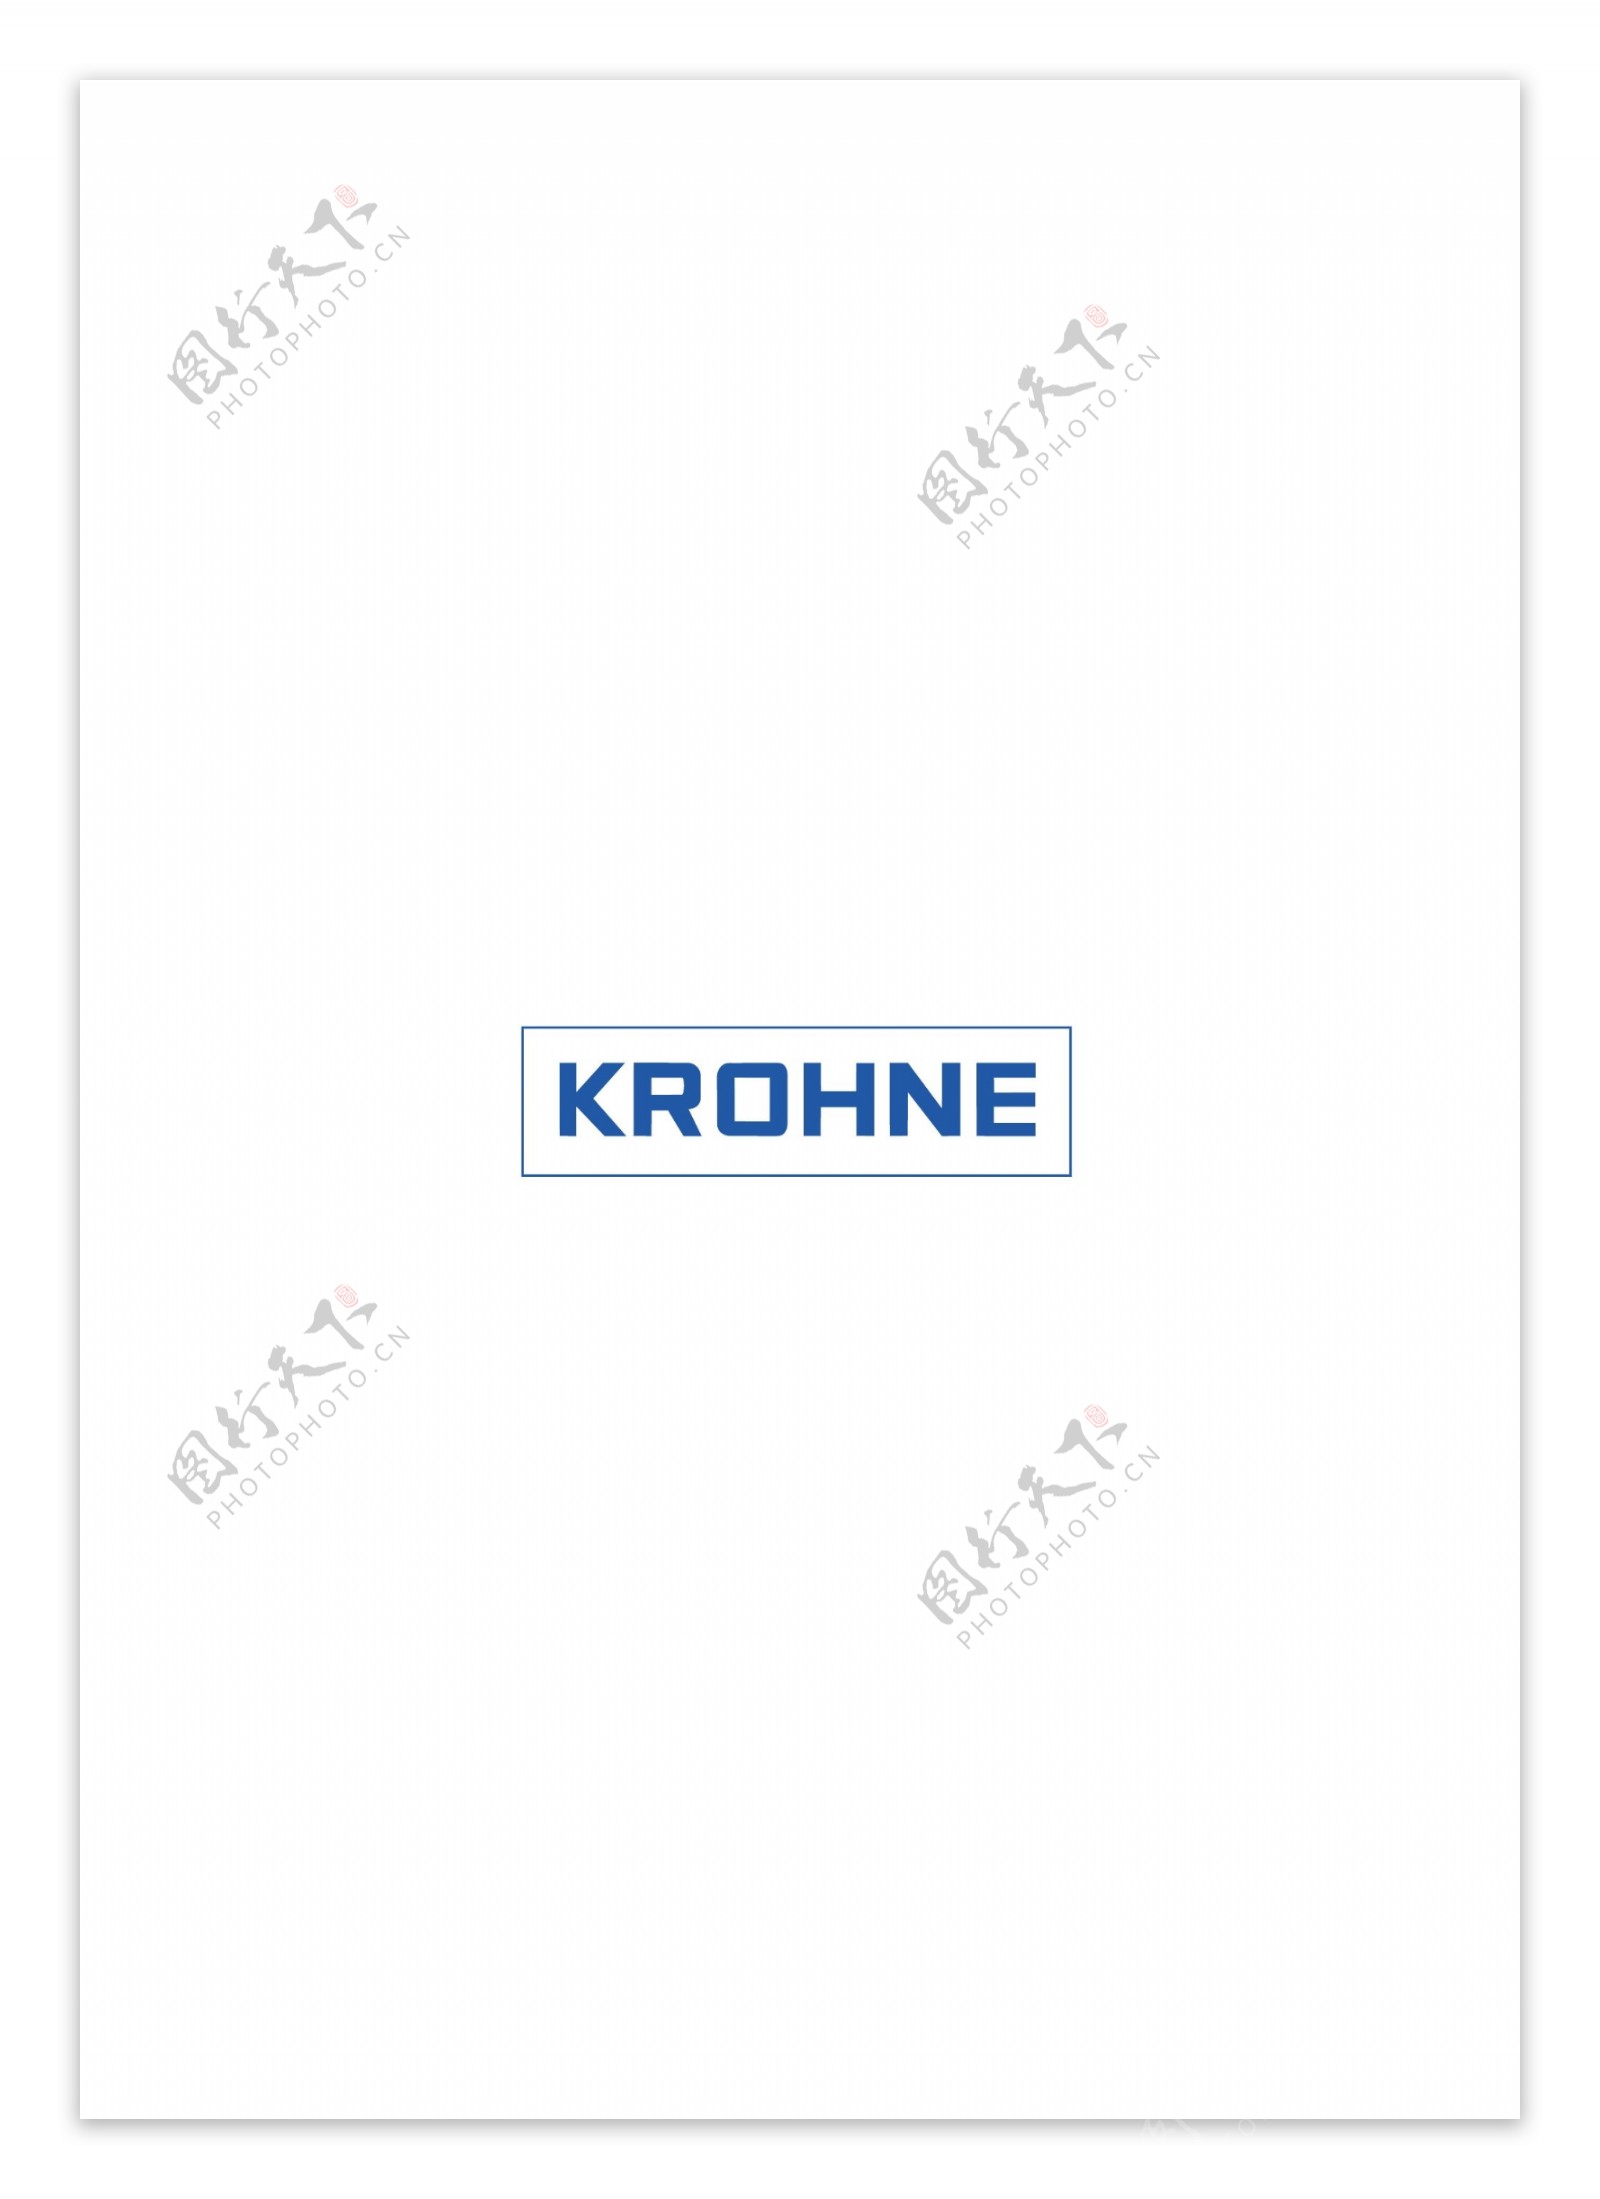 KROHNElogo设计欣赏KROHNE重工LOGO下载标志设计欣赏